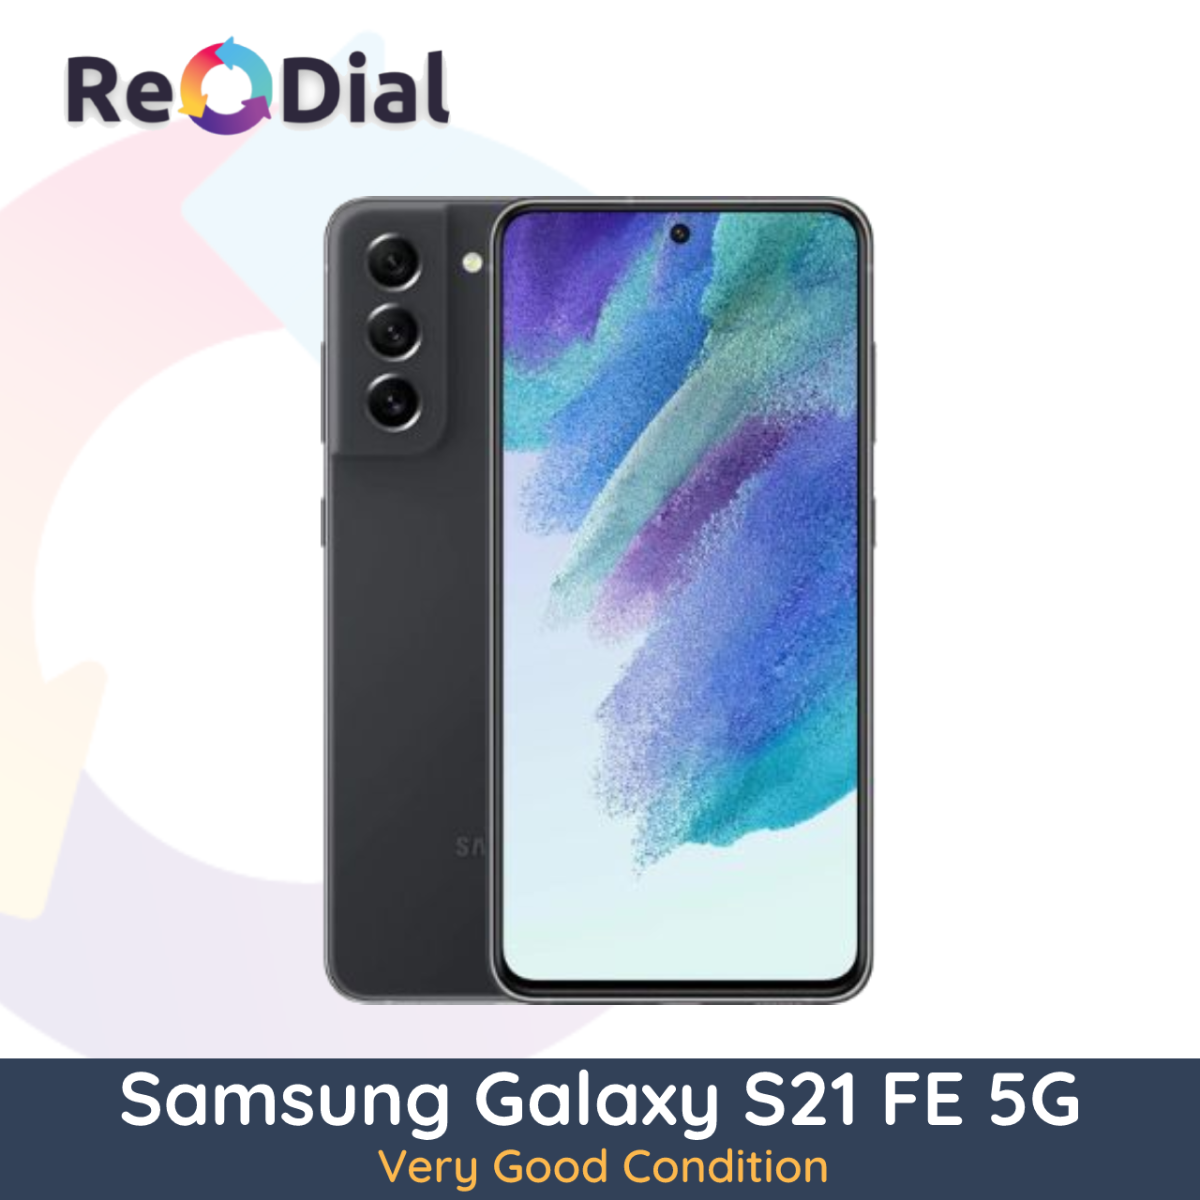 Samsung Galaxy S21 FE 5G - Very Good Condition